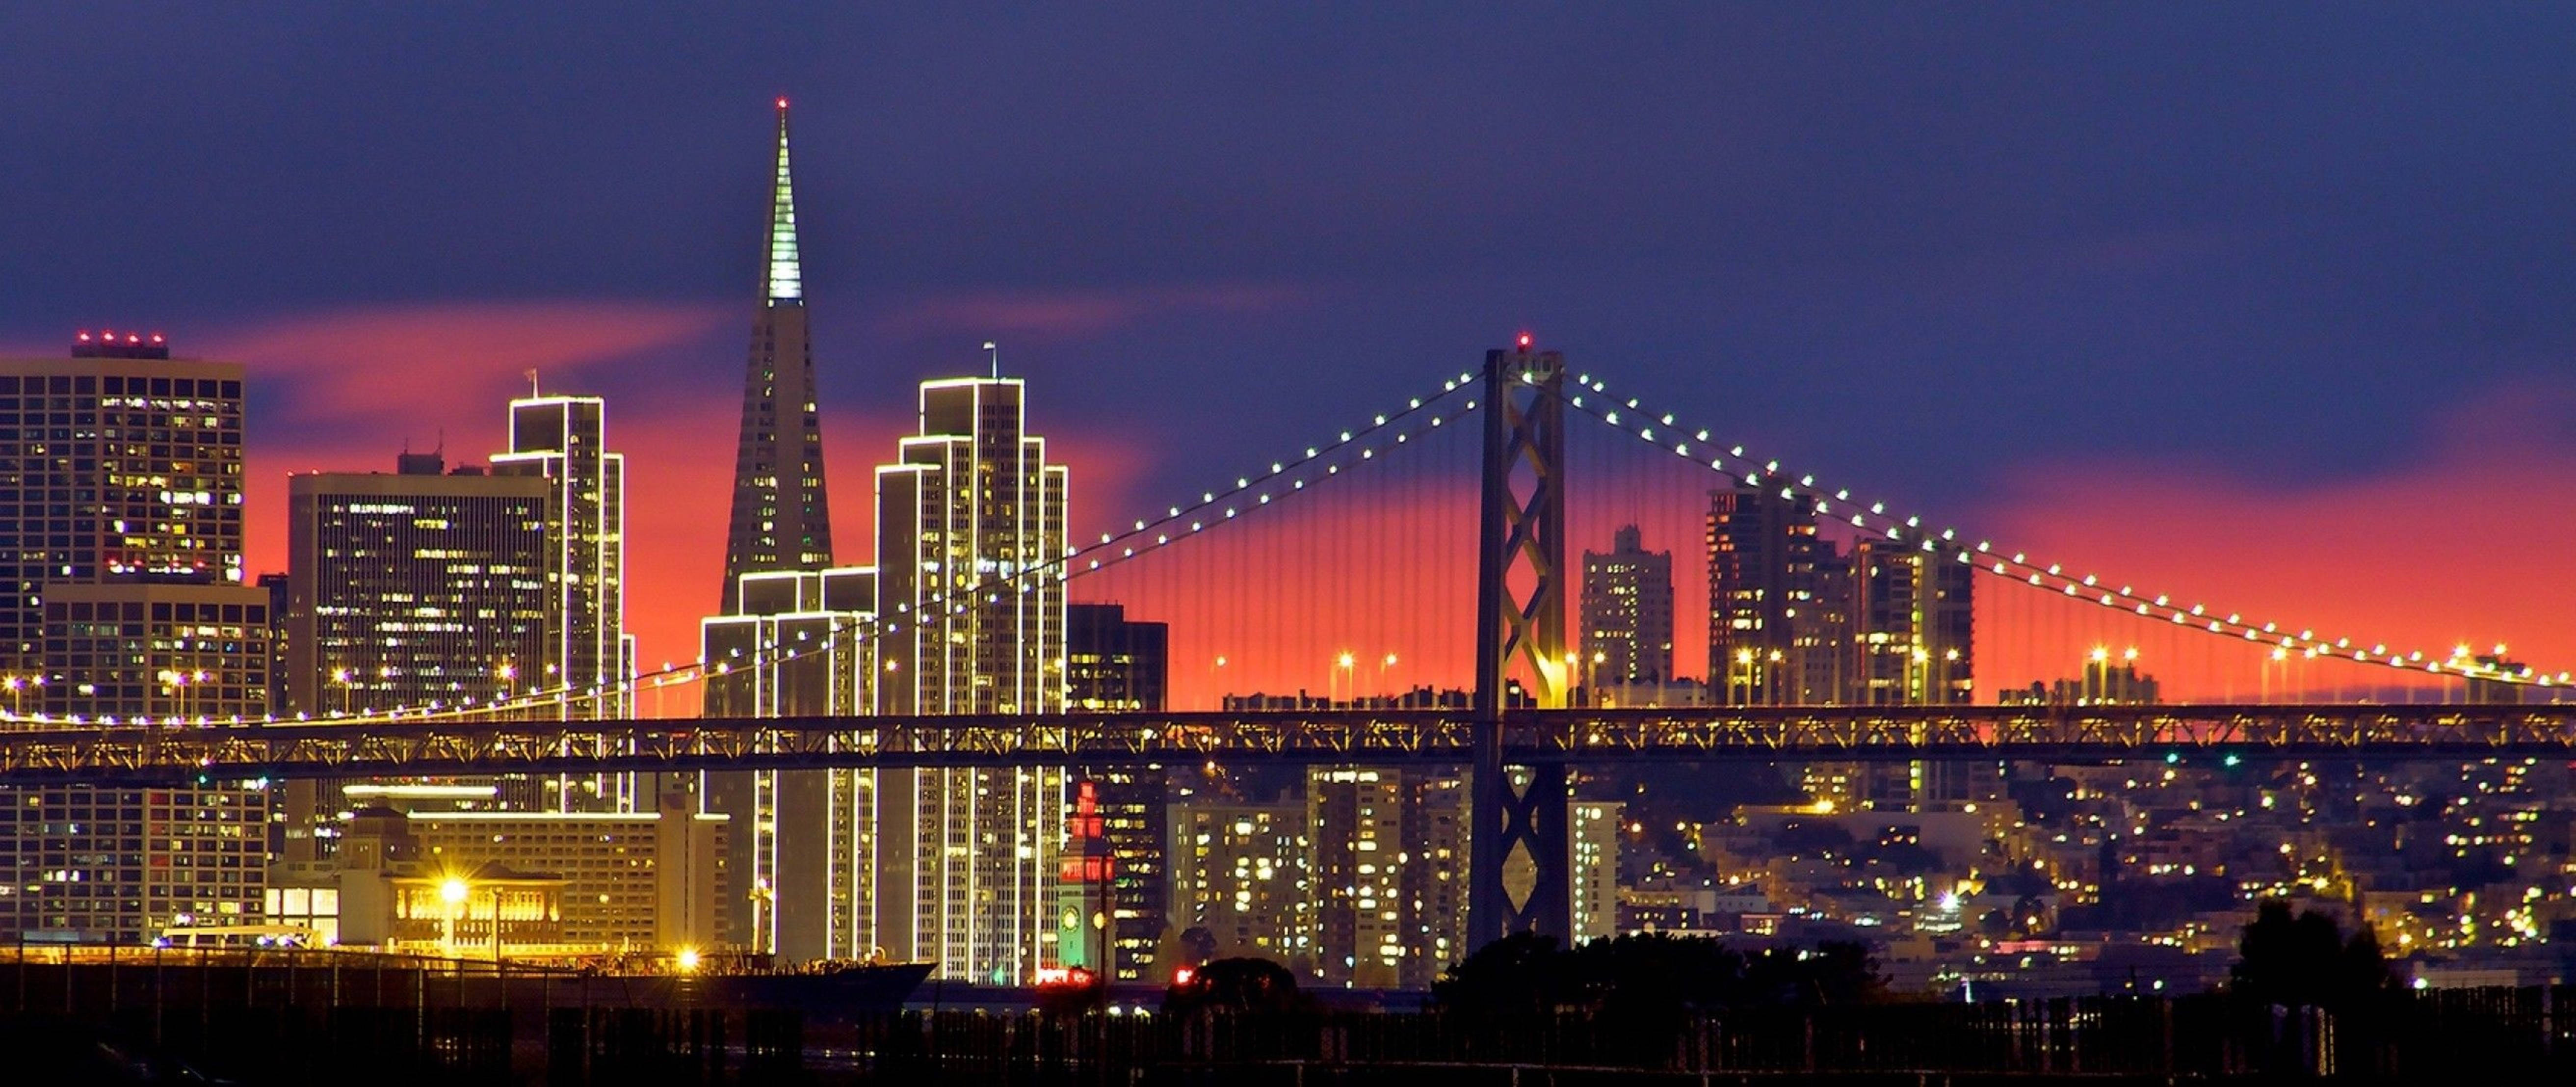 San Francisco 4k City Flashing Lights Background